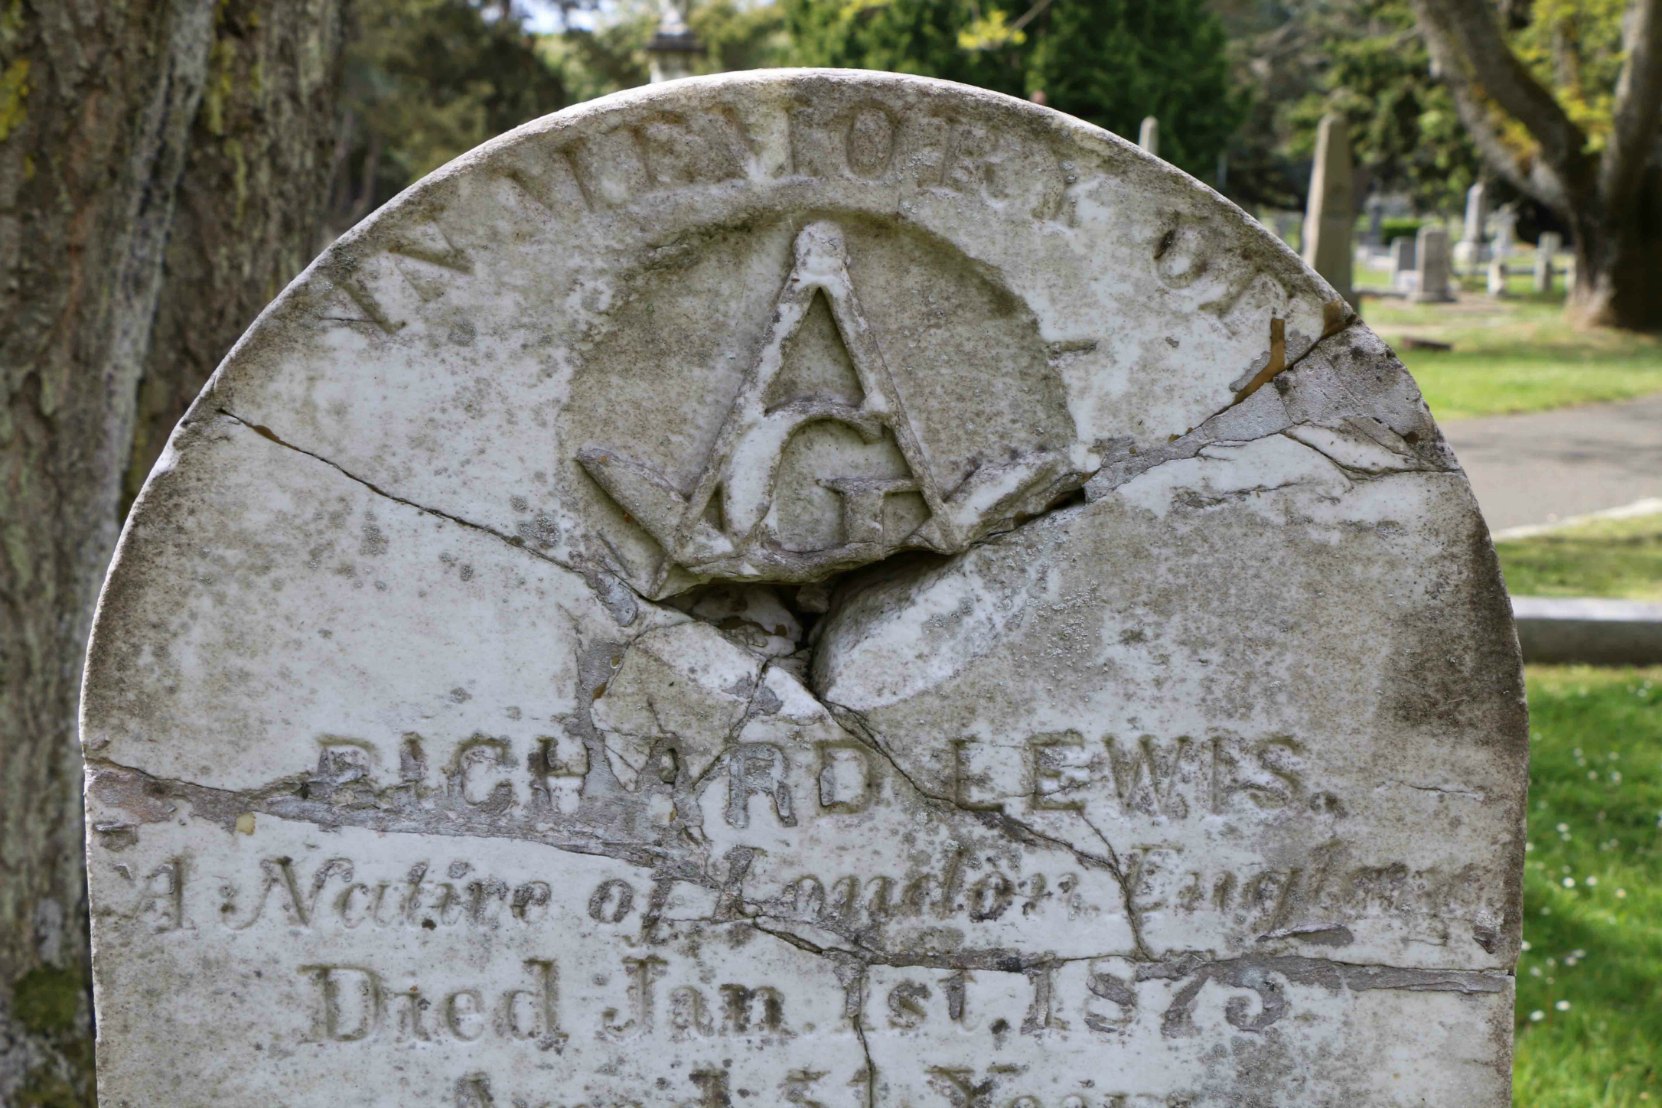 Repaired vandalism damage on Richard Lewis' gravestone, Ross Bay Cemetery, Victoria, B.C.